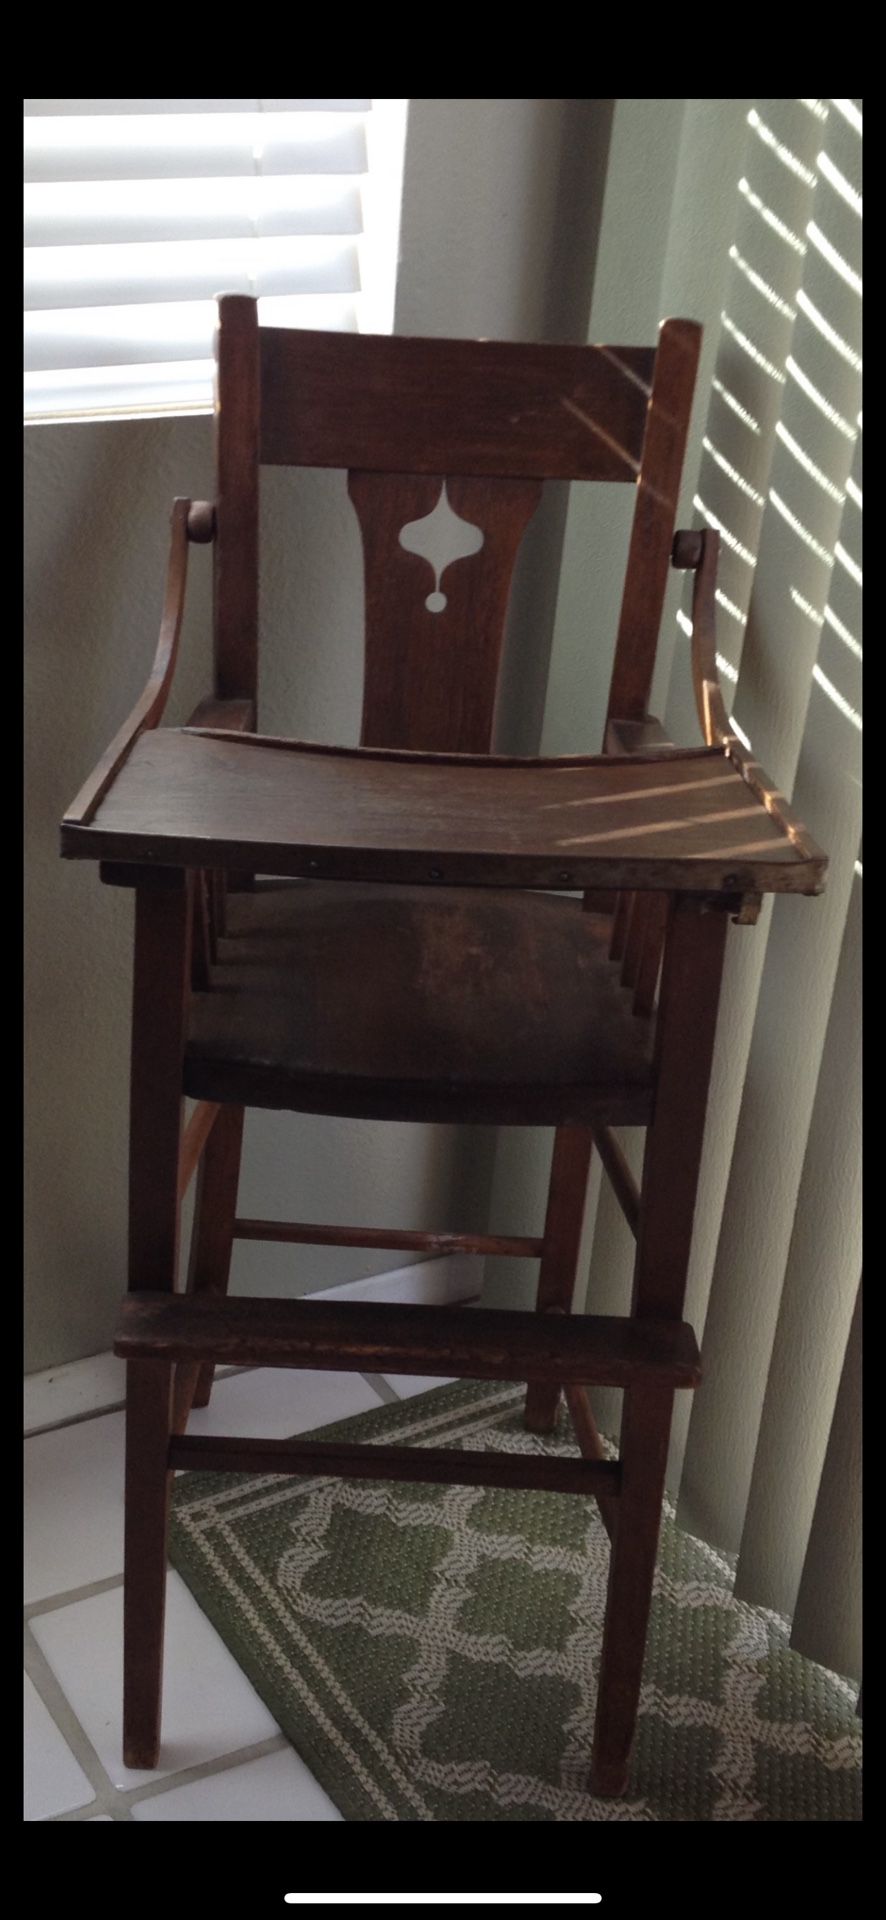 Antique Oak High Chair